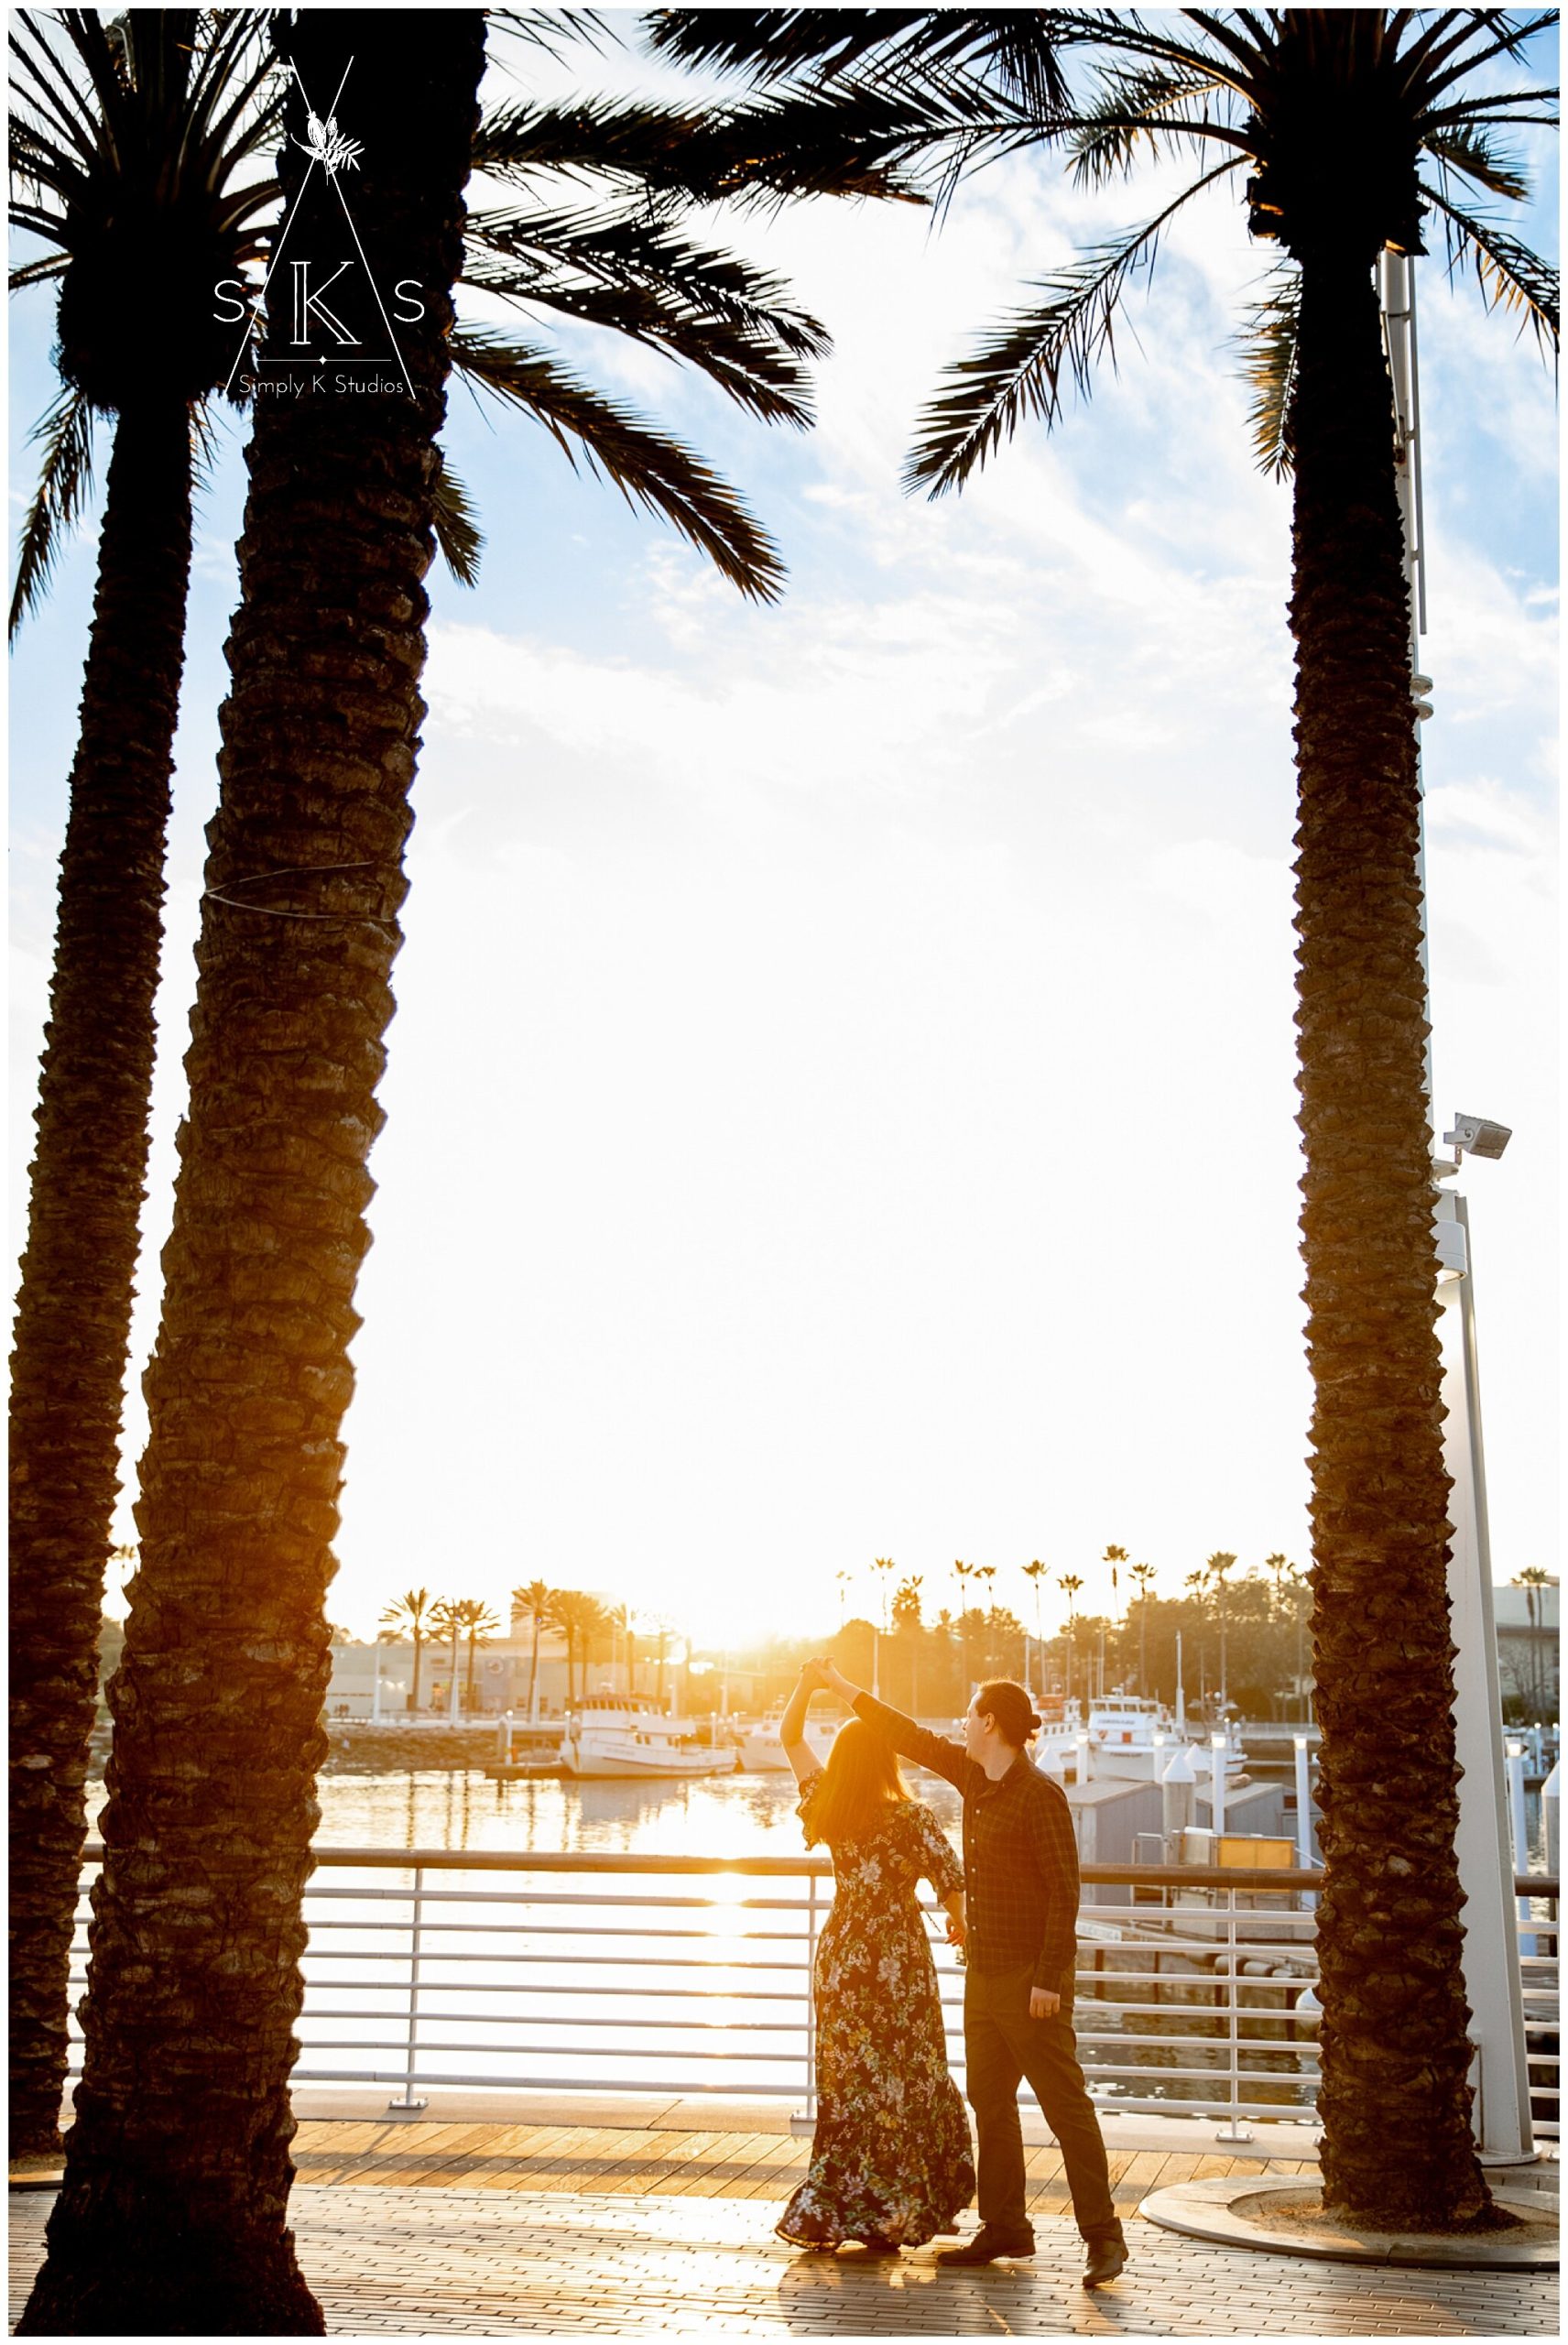  A couple dancing among palm trees 